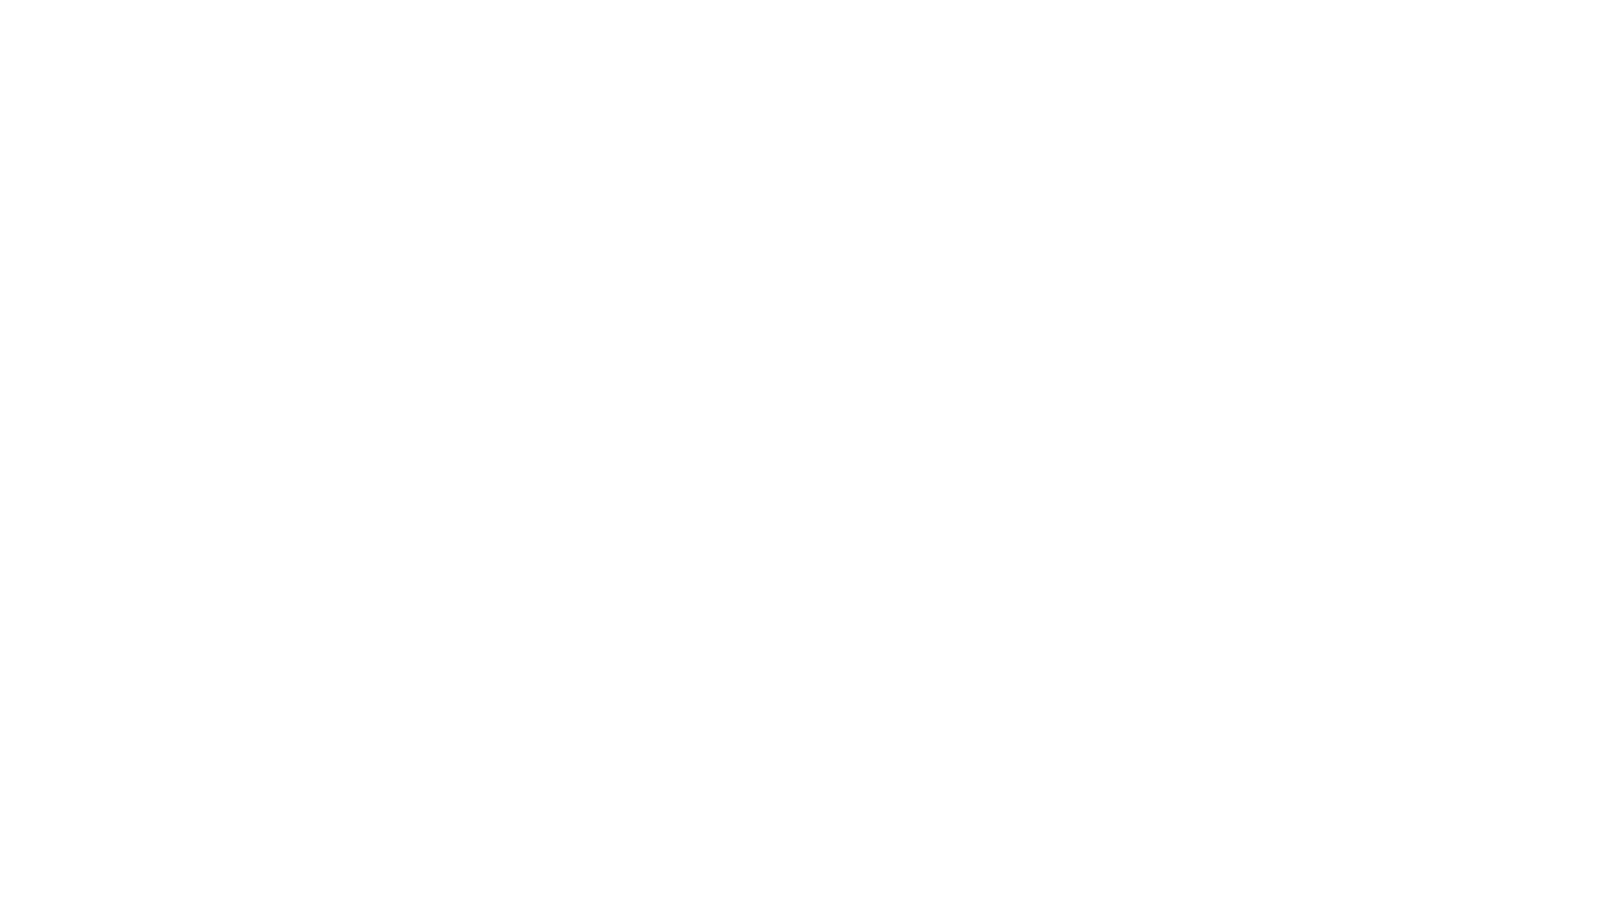 CVC Capital Logo